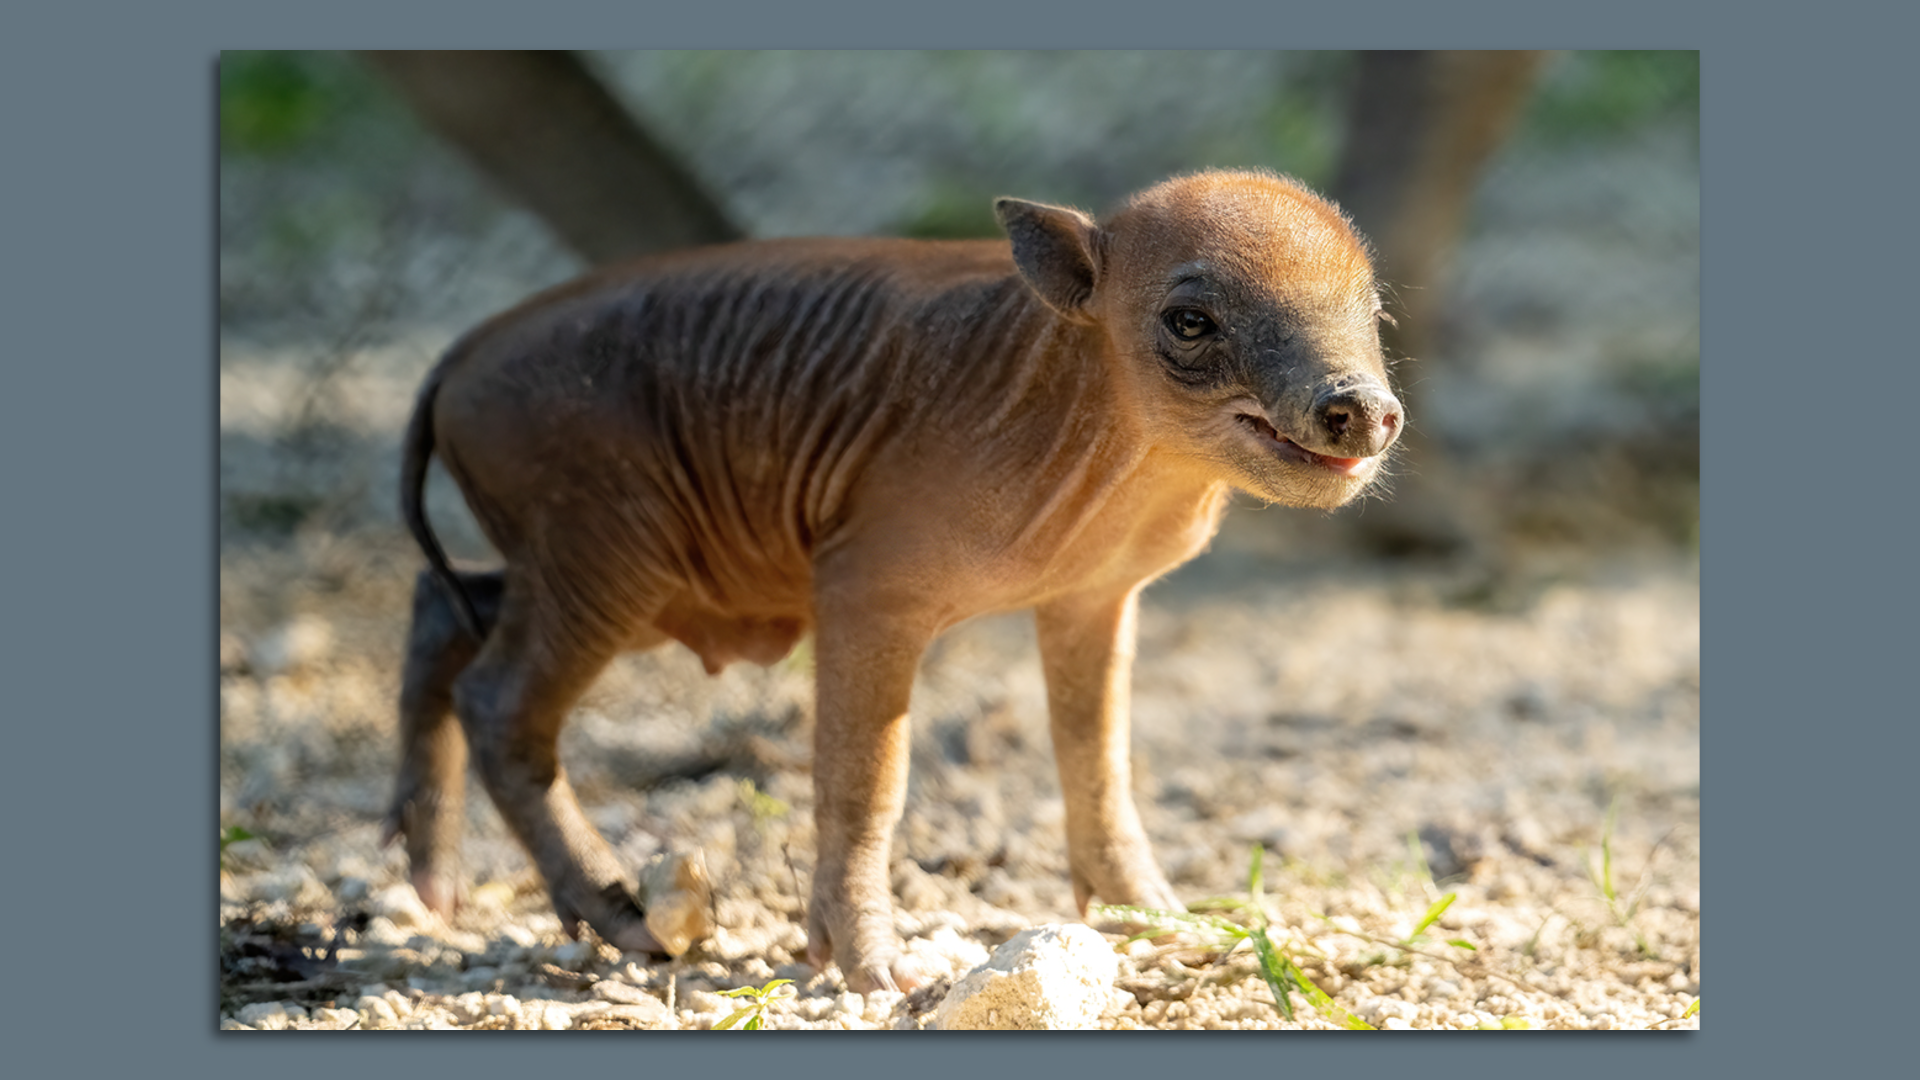 A baby babirusa.